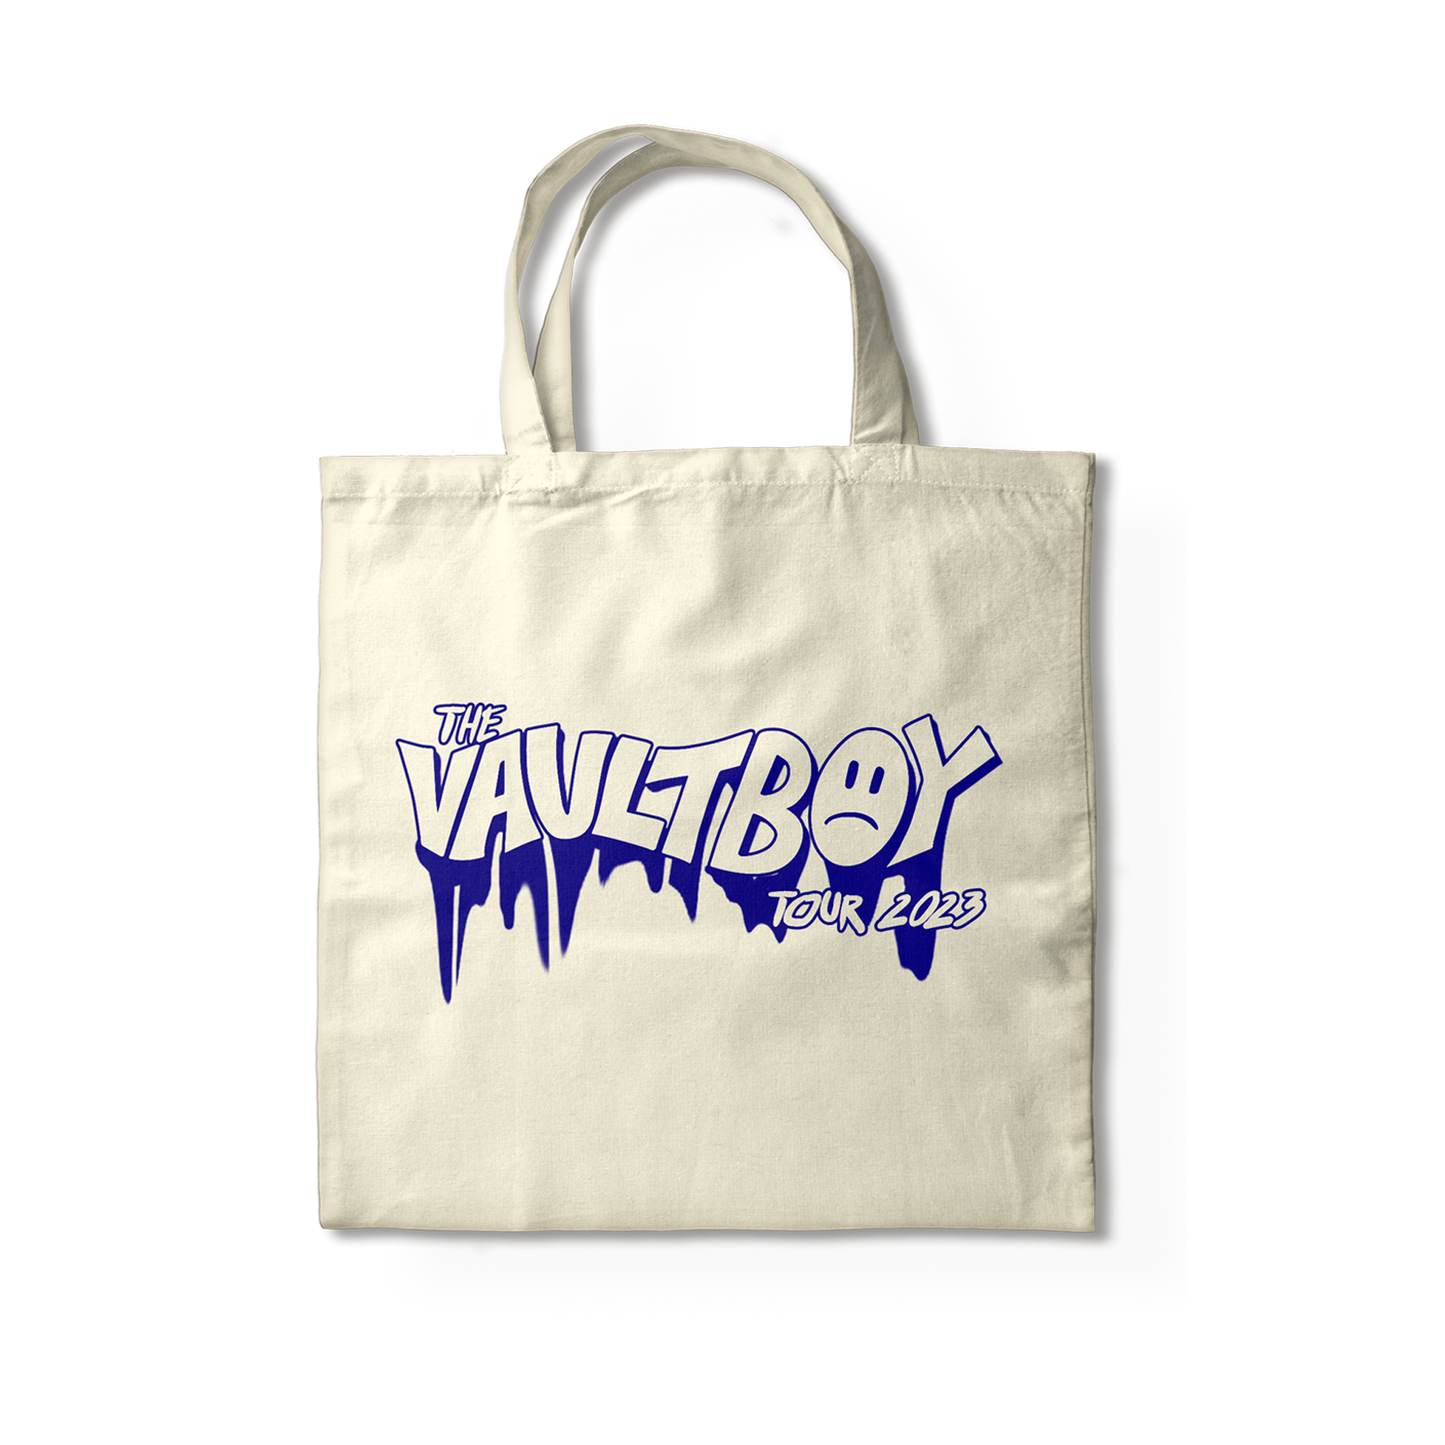 'the vaultboy tour' tote bag